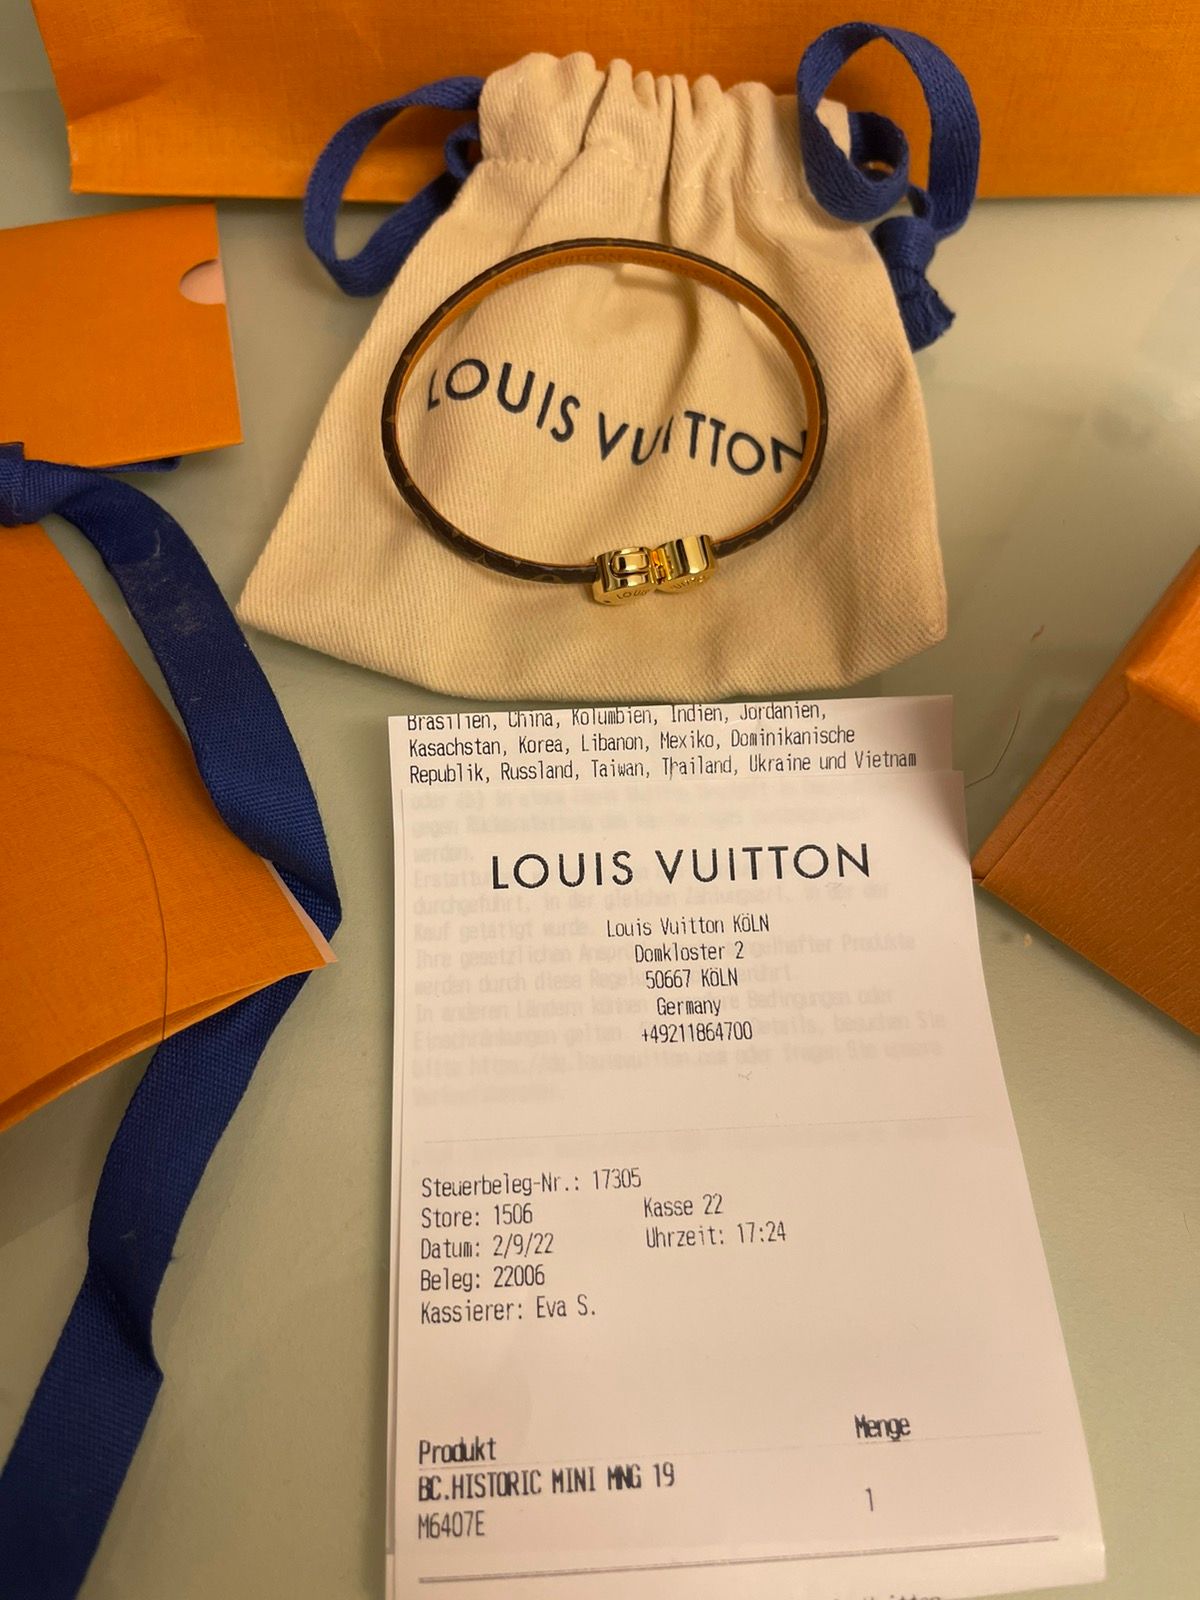 Louis Vuitton x Nigo Keep It Trunk Bracelet